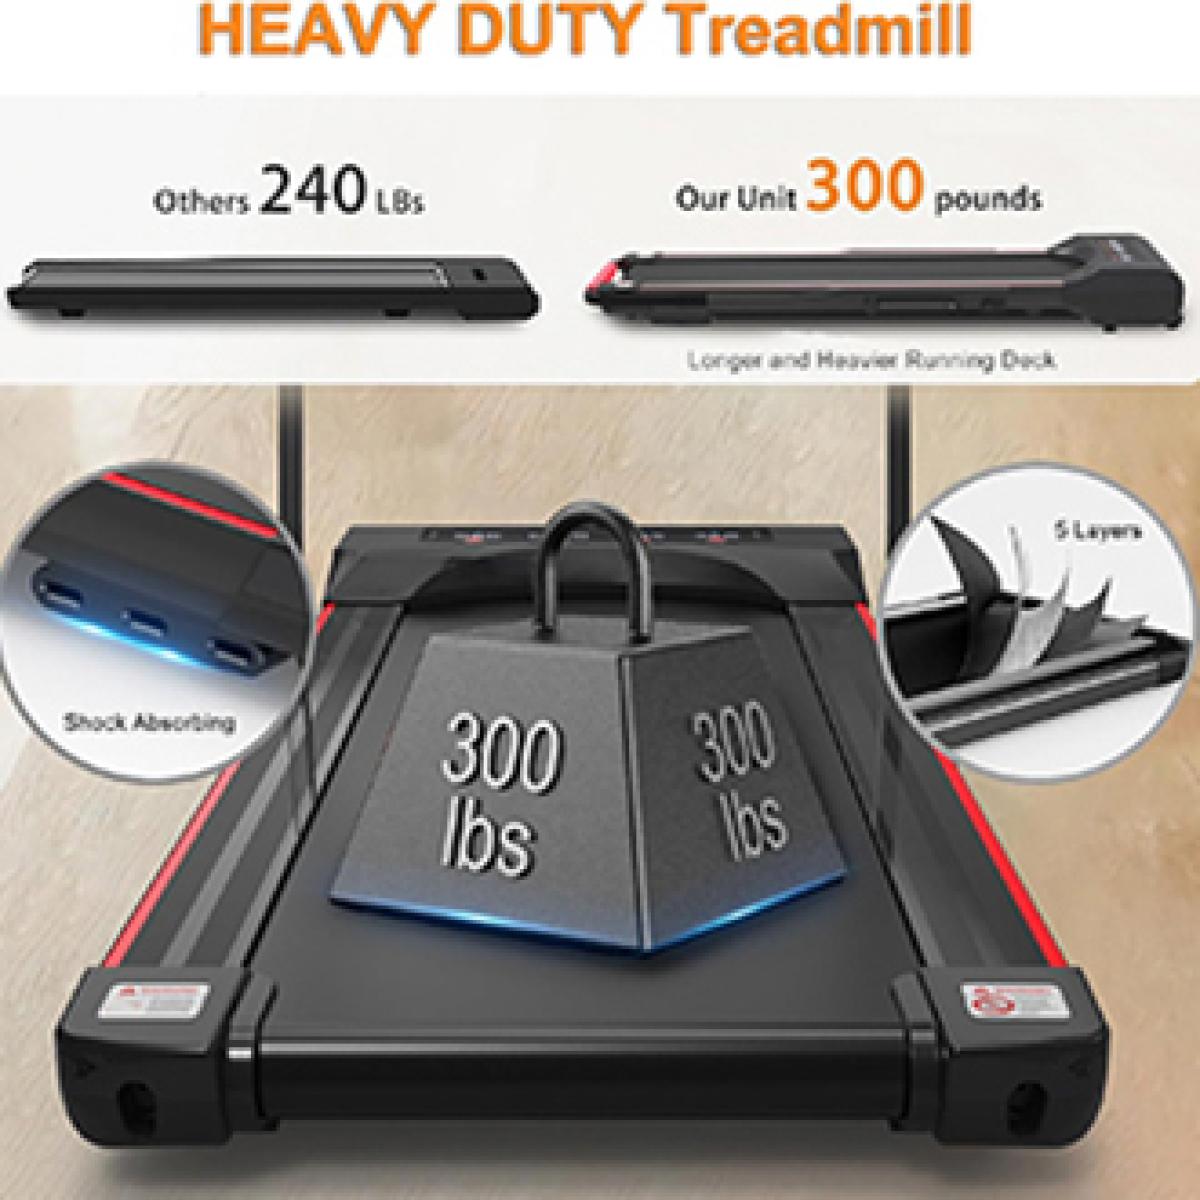 Under Desk Walking Pad Treadmill Foldable with Handlebar Remote Controll, 300 Lb Capacity